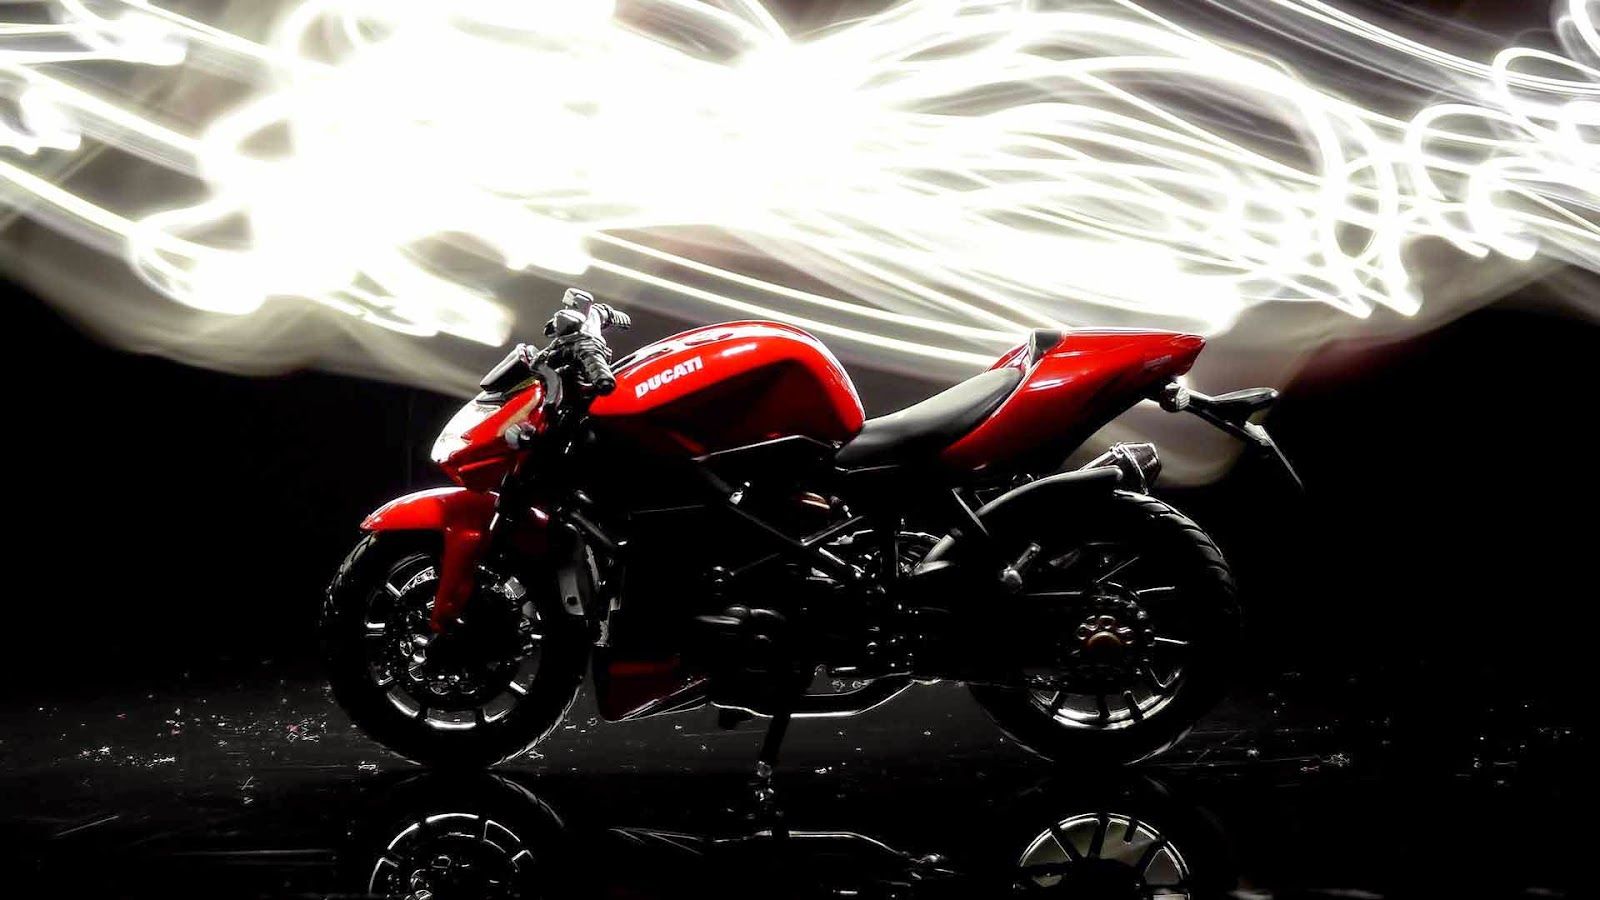 HD Wallpapers Ducati Bikes Backgrounds